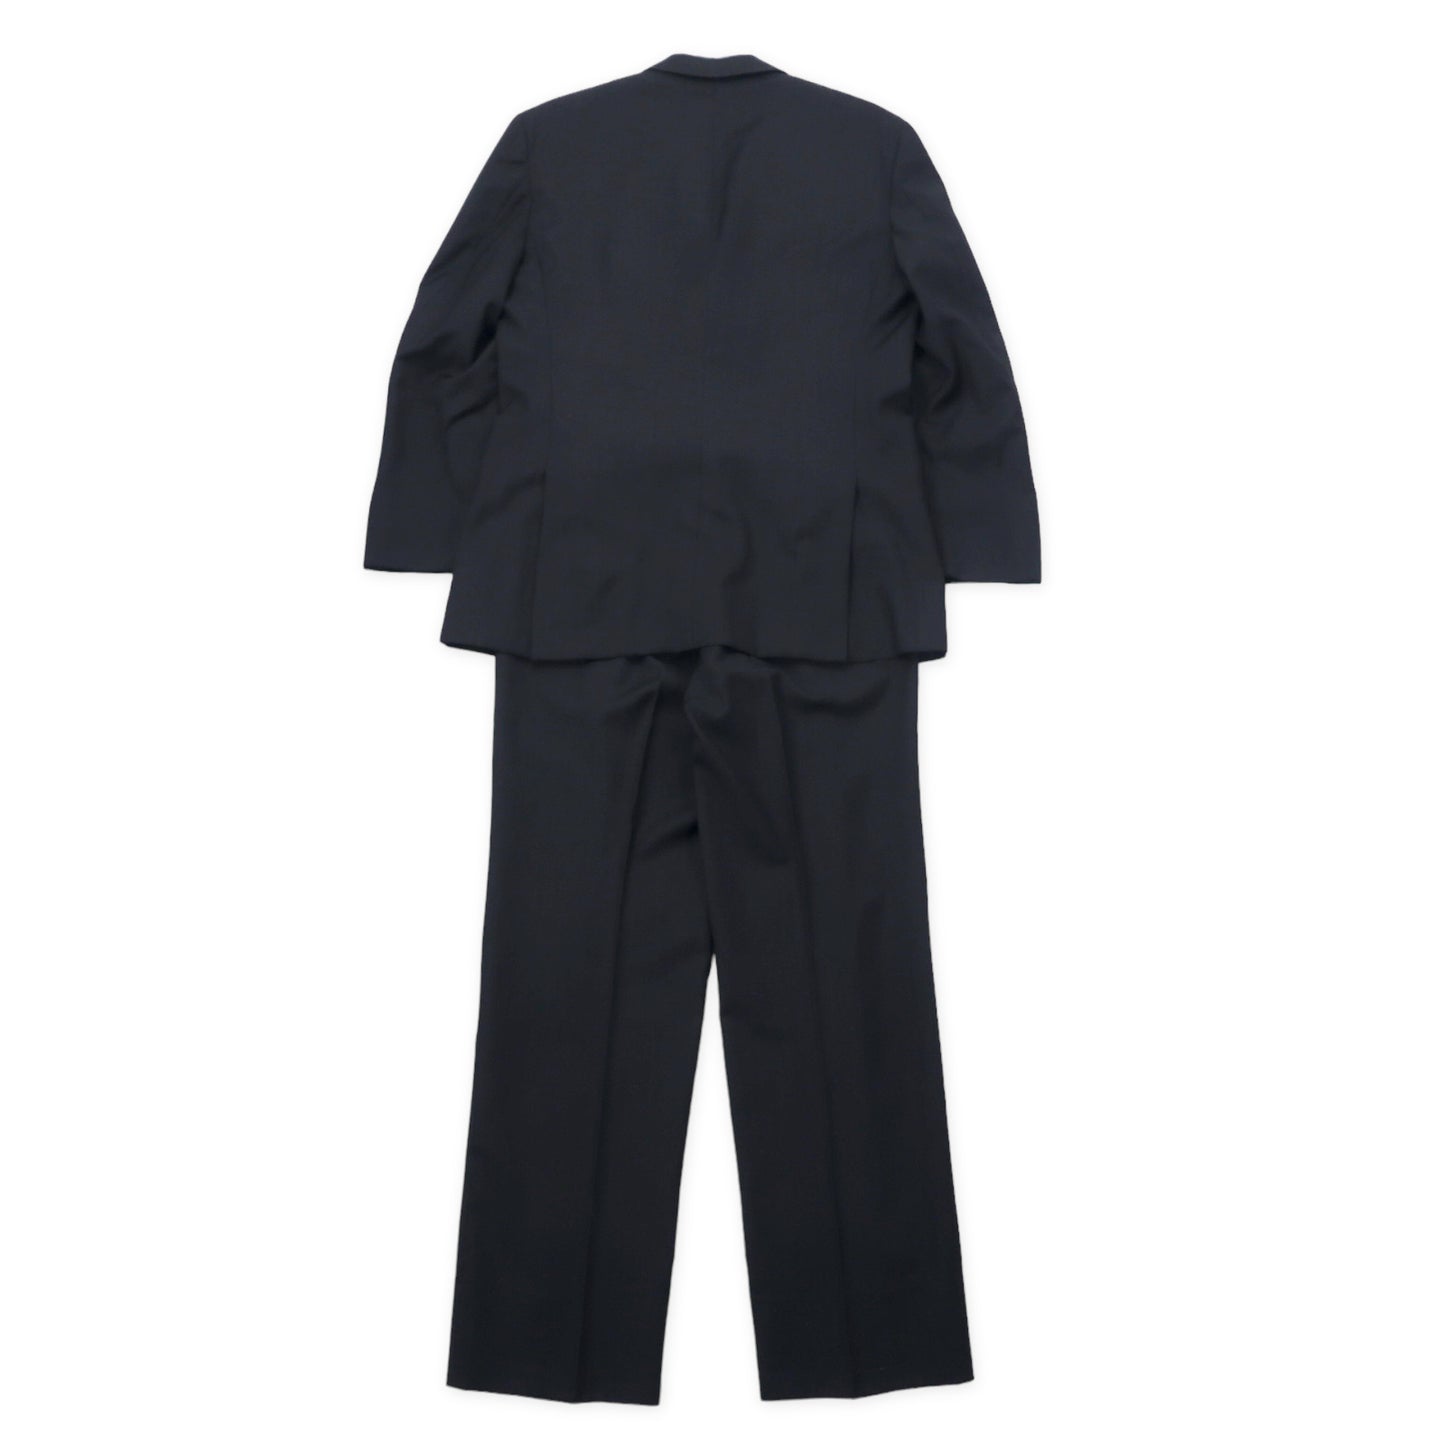 POLO BY RALPH LAUREN 3B Suit Setup C96-W86-T175 AB6 Black Wool